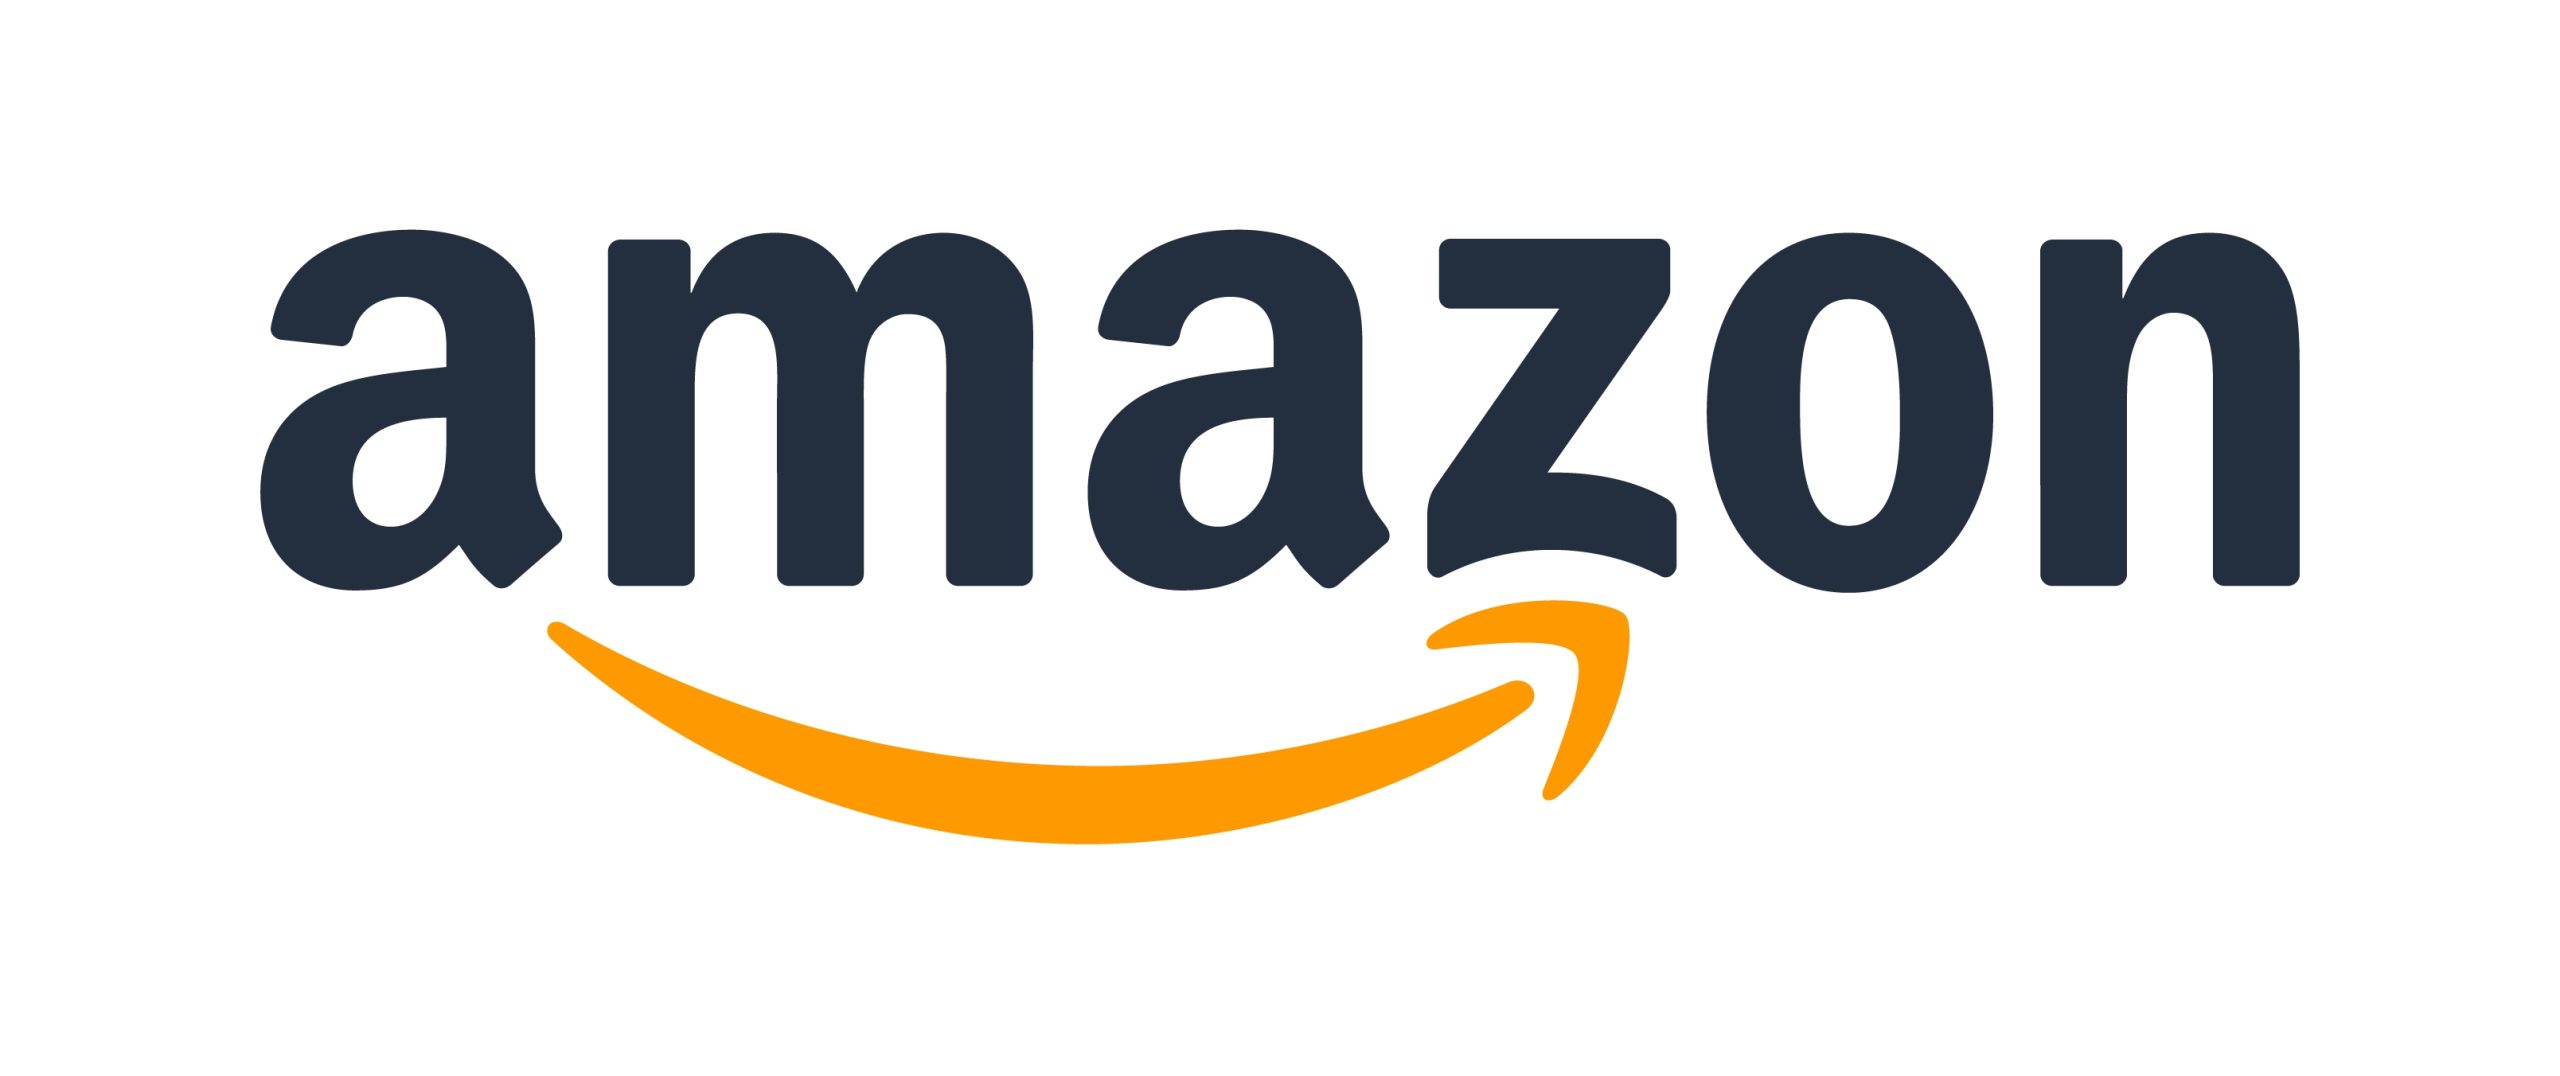 Amazon Brasil implementa nova modalidade de vendas com ótimo custo-benefício para o consumidor e que incentiva a economia circular